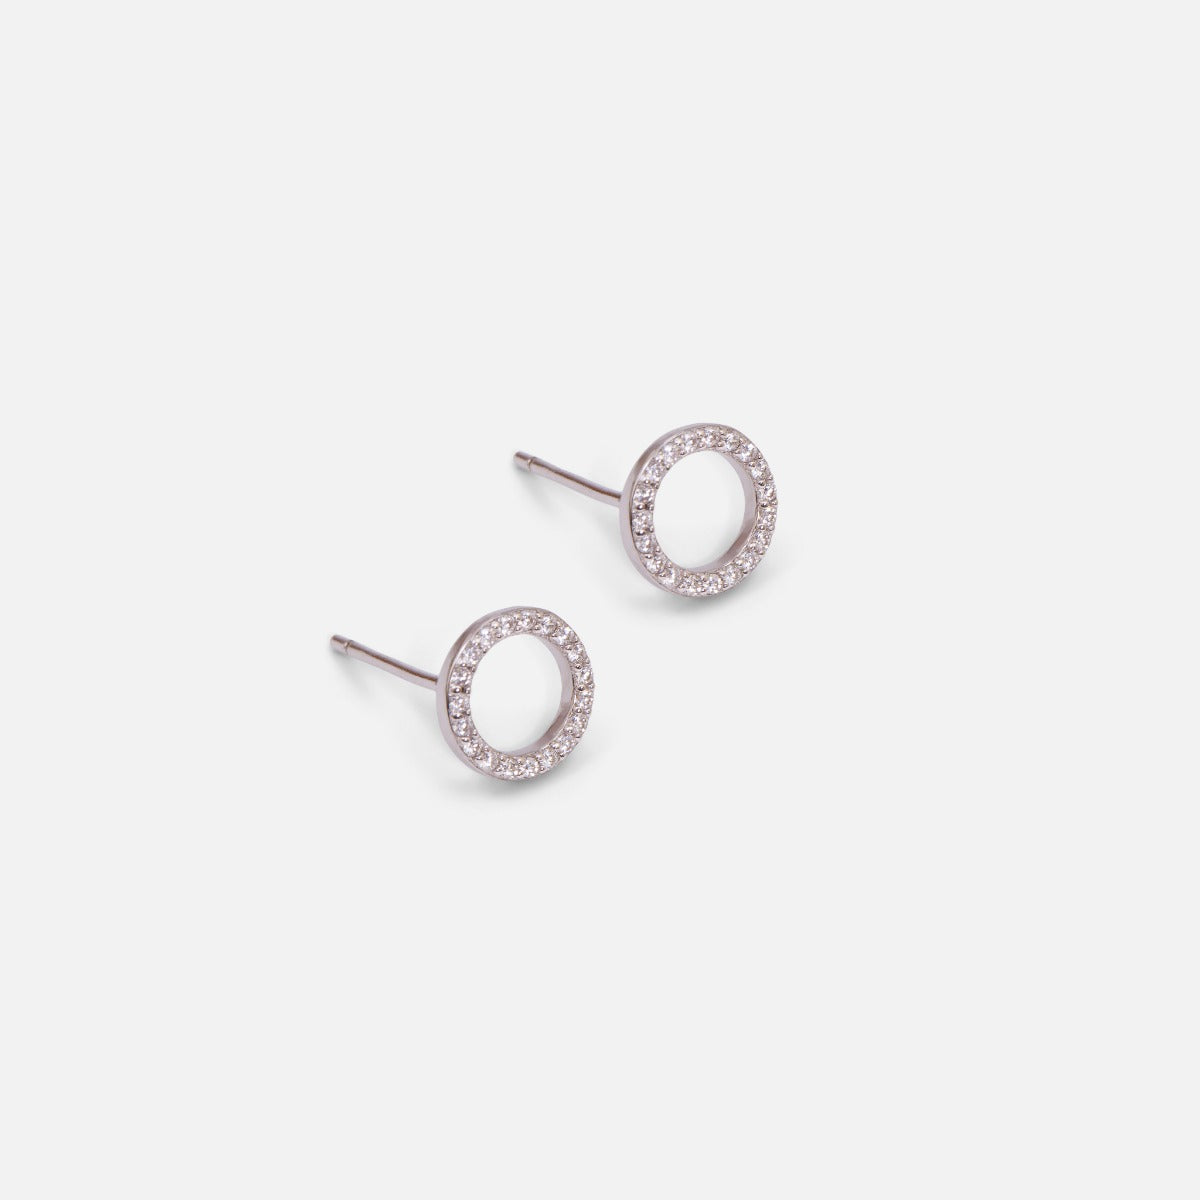 Circle sterling silver earrings